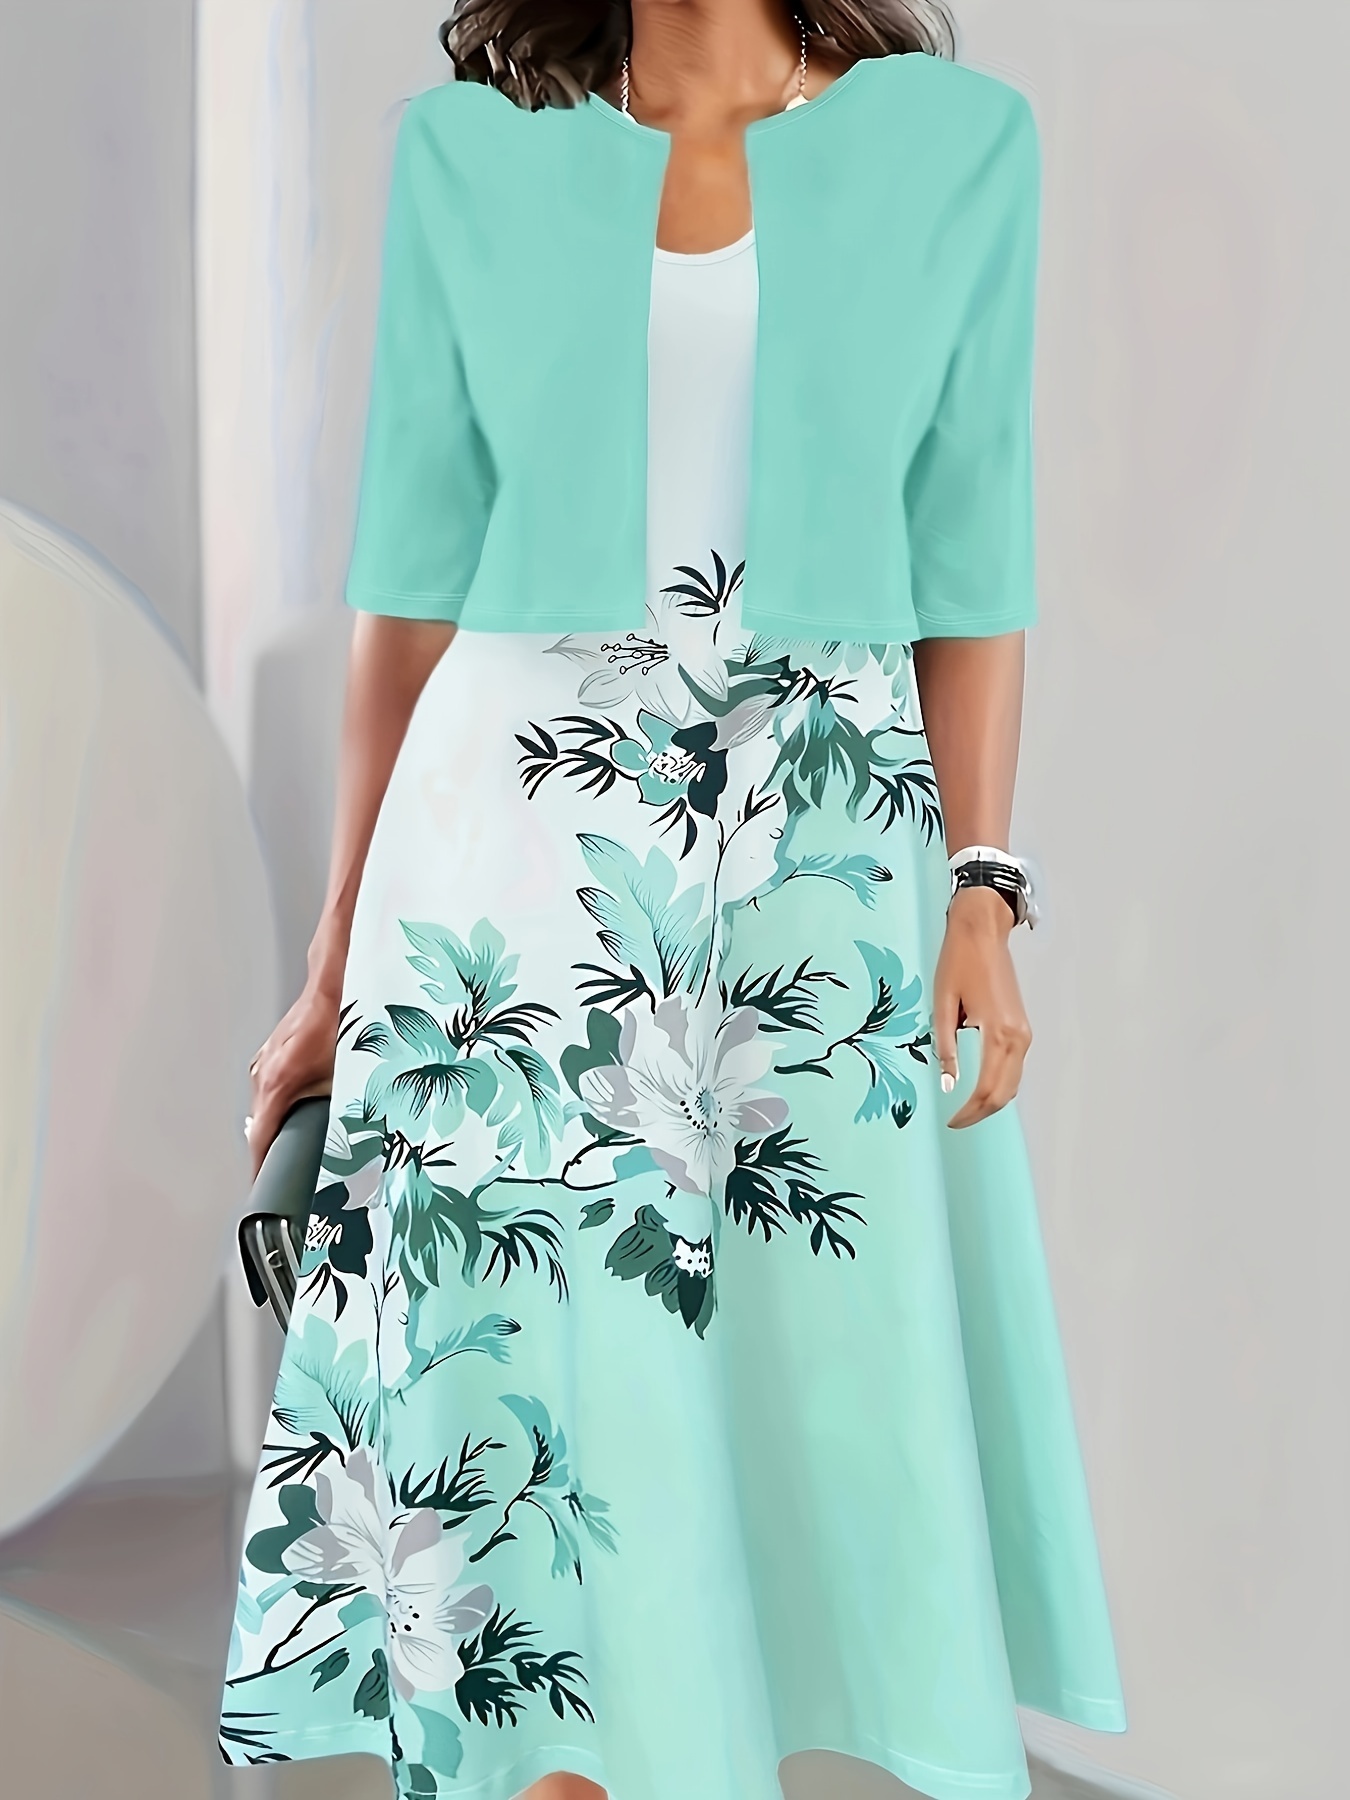 Pastel Dress for Women, Thin Belt Long Sleeve Elegant Solid Color